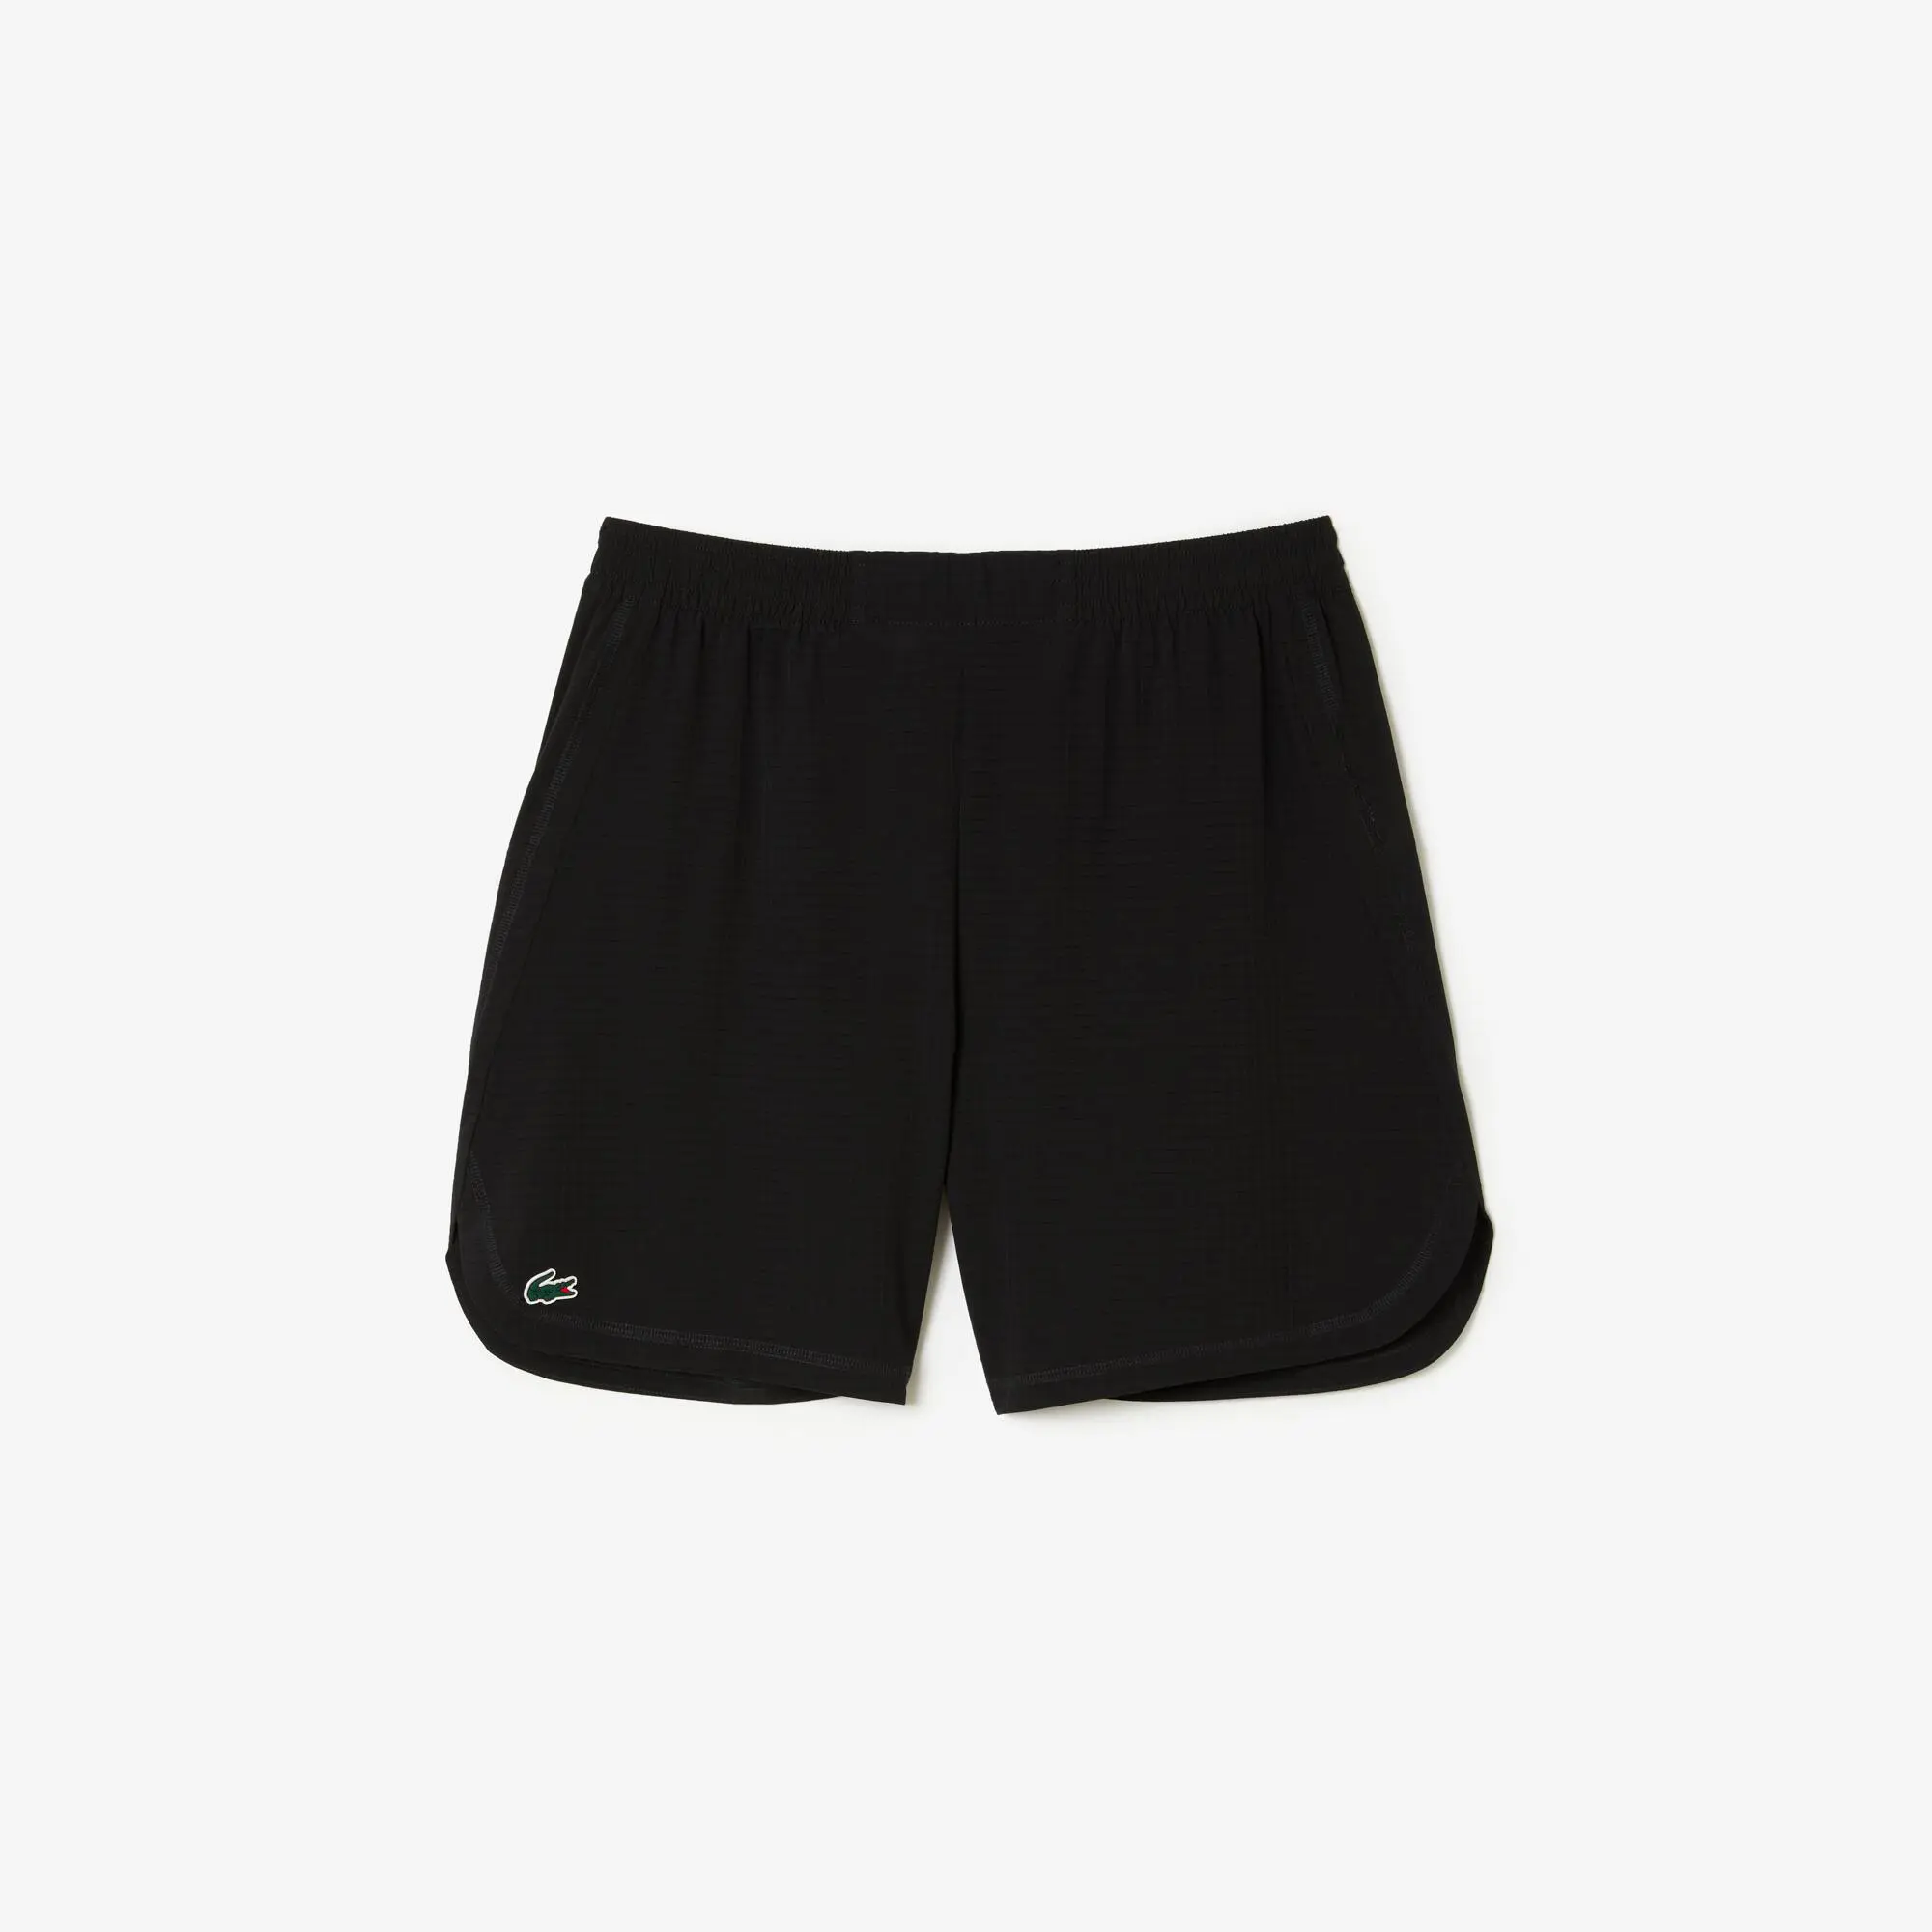 Lacoste Men’s Lacoste Sport Check Stretch Mesh Shorts. 2